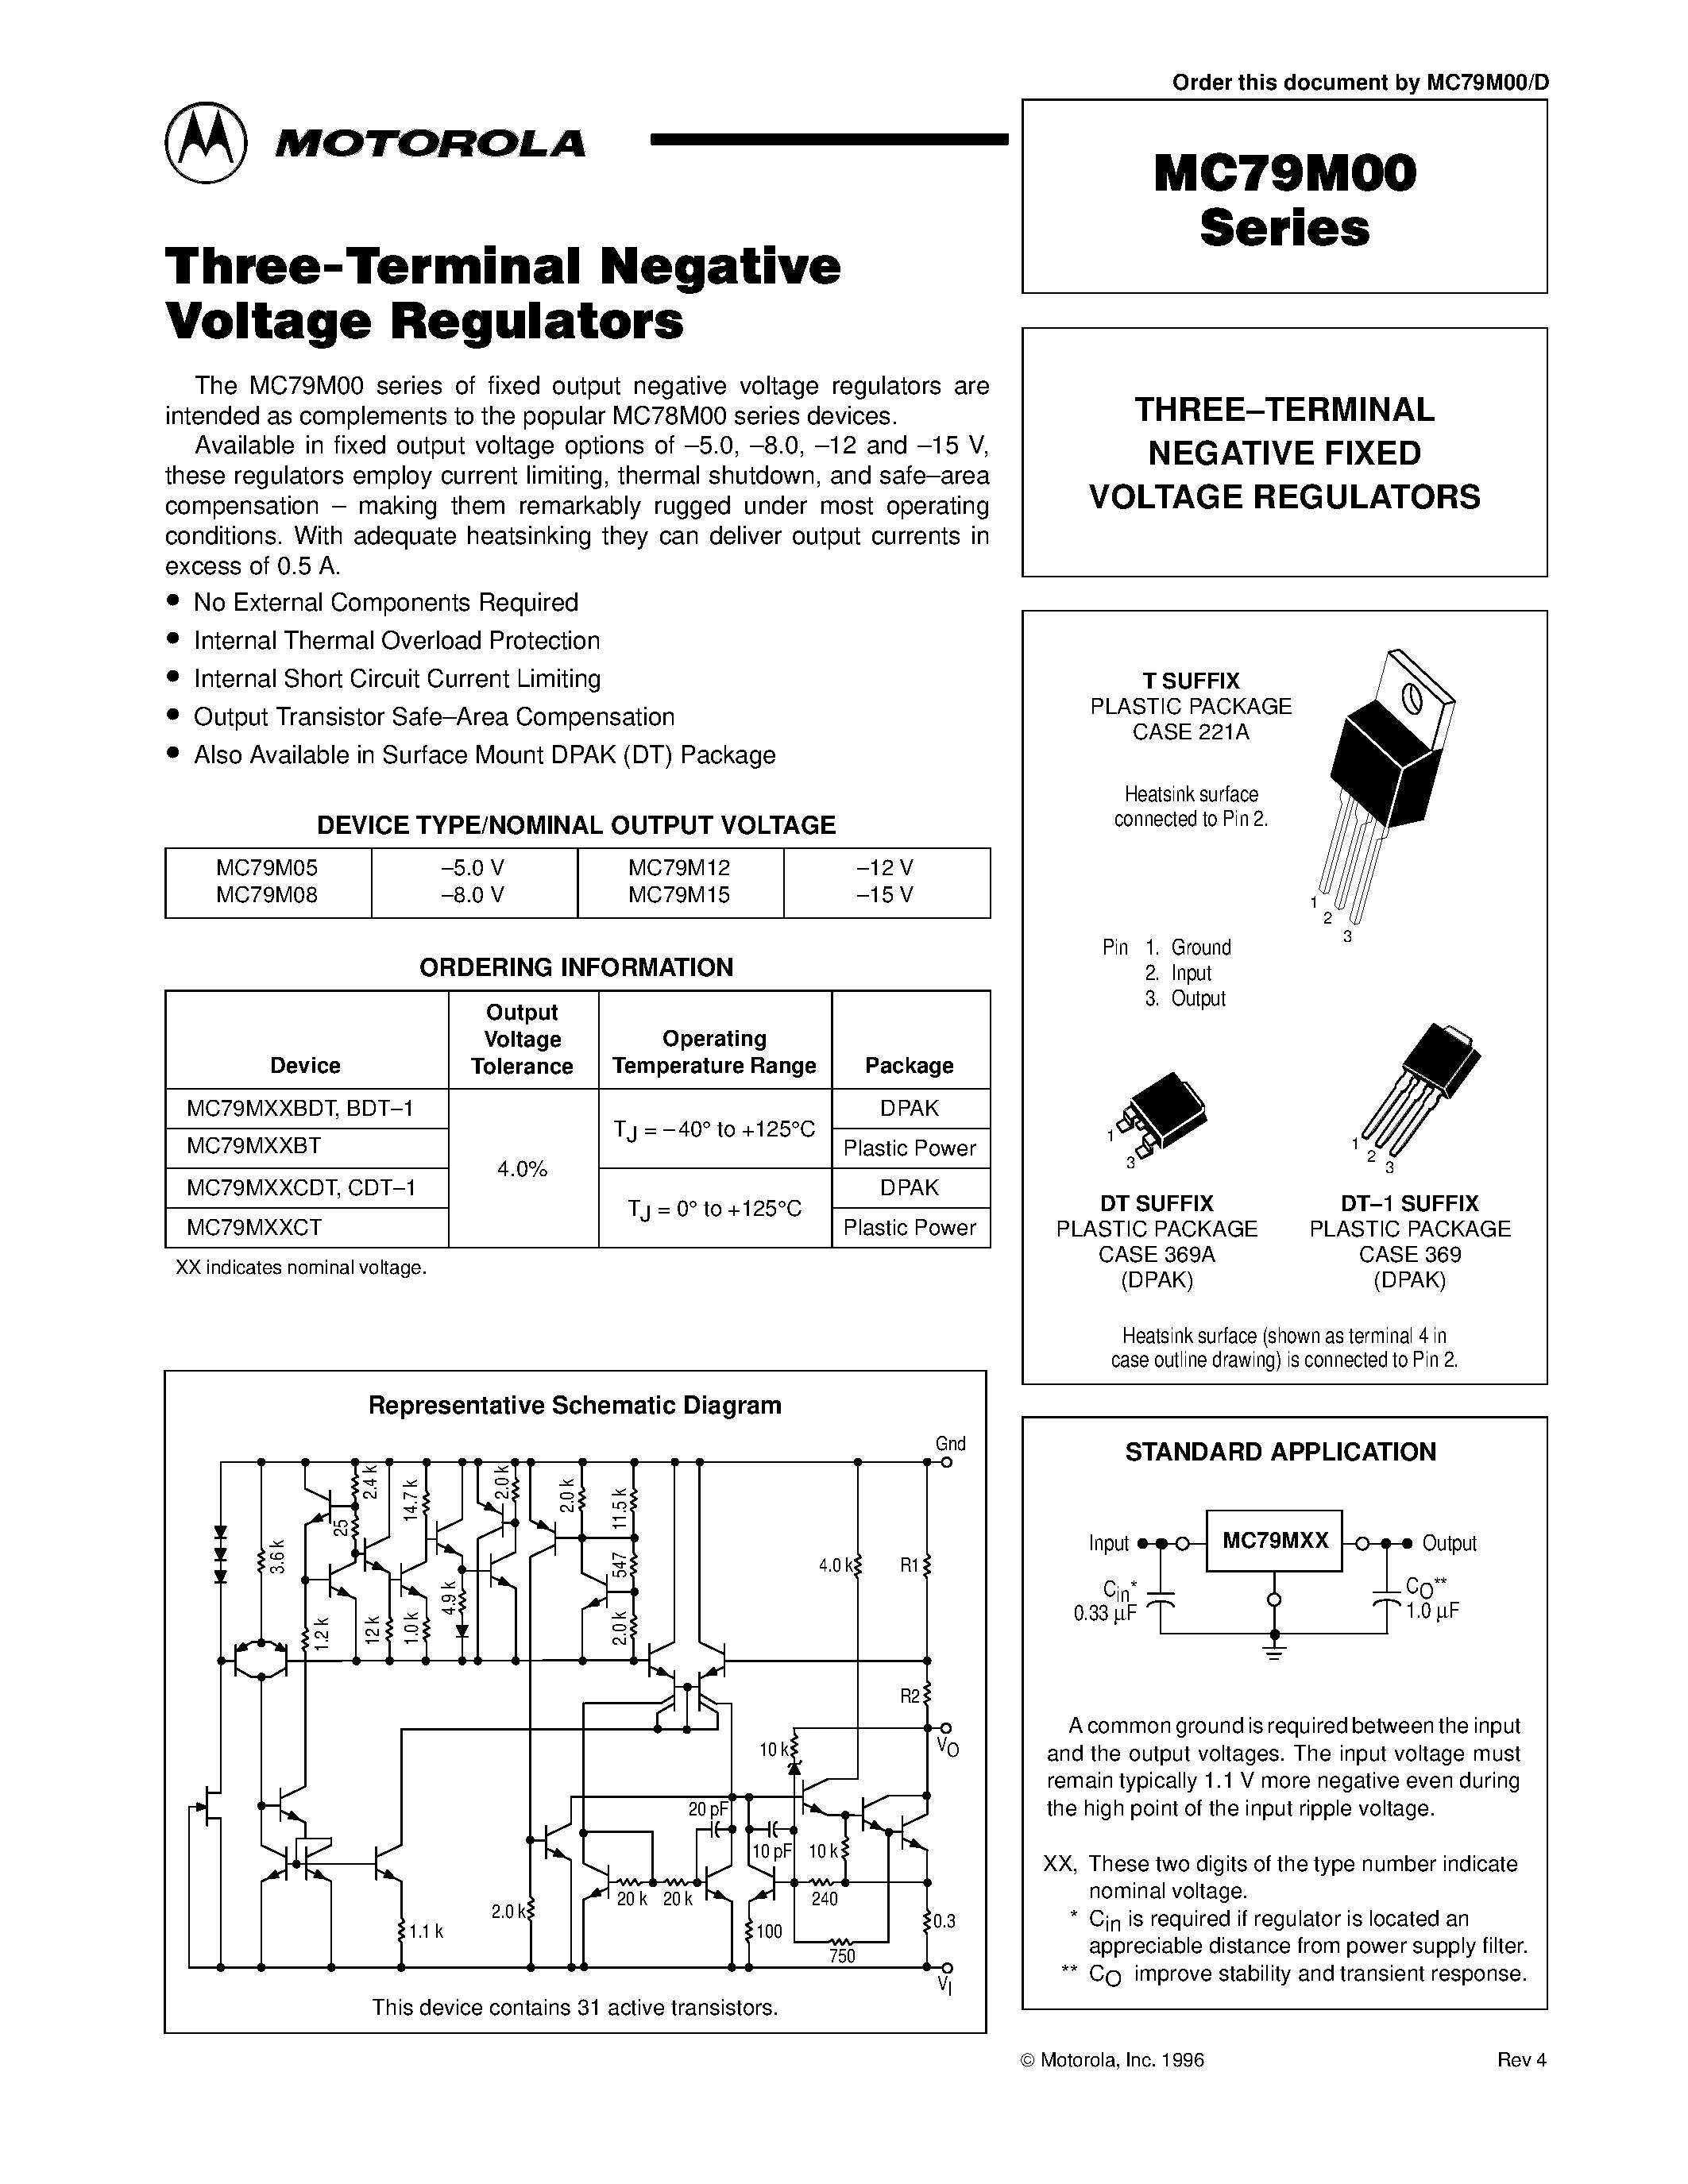 Datasheet MC79M12BDT - THREE-TERMINAL NEGATIVE FIXED VOLTAGE REGULATORS page 1